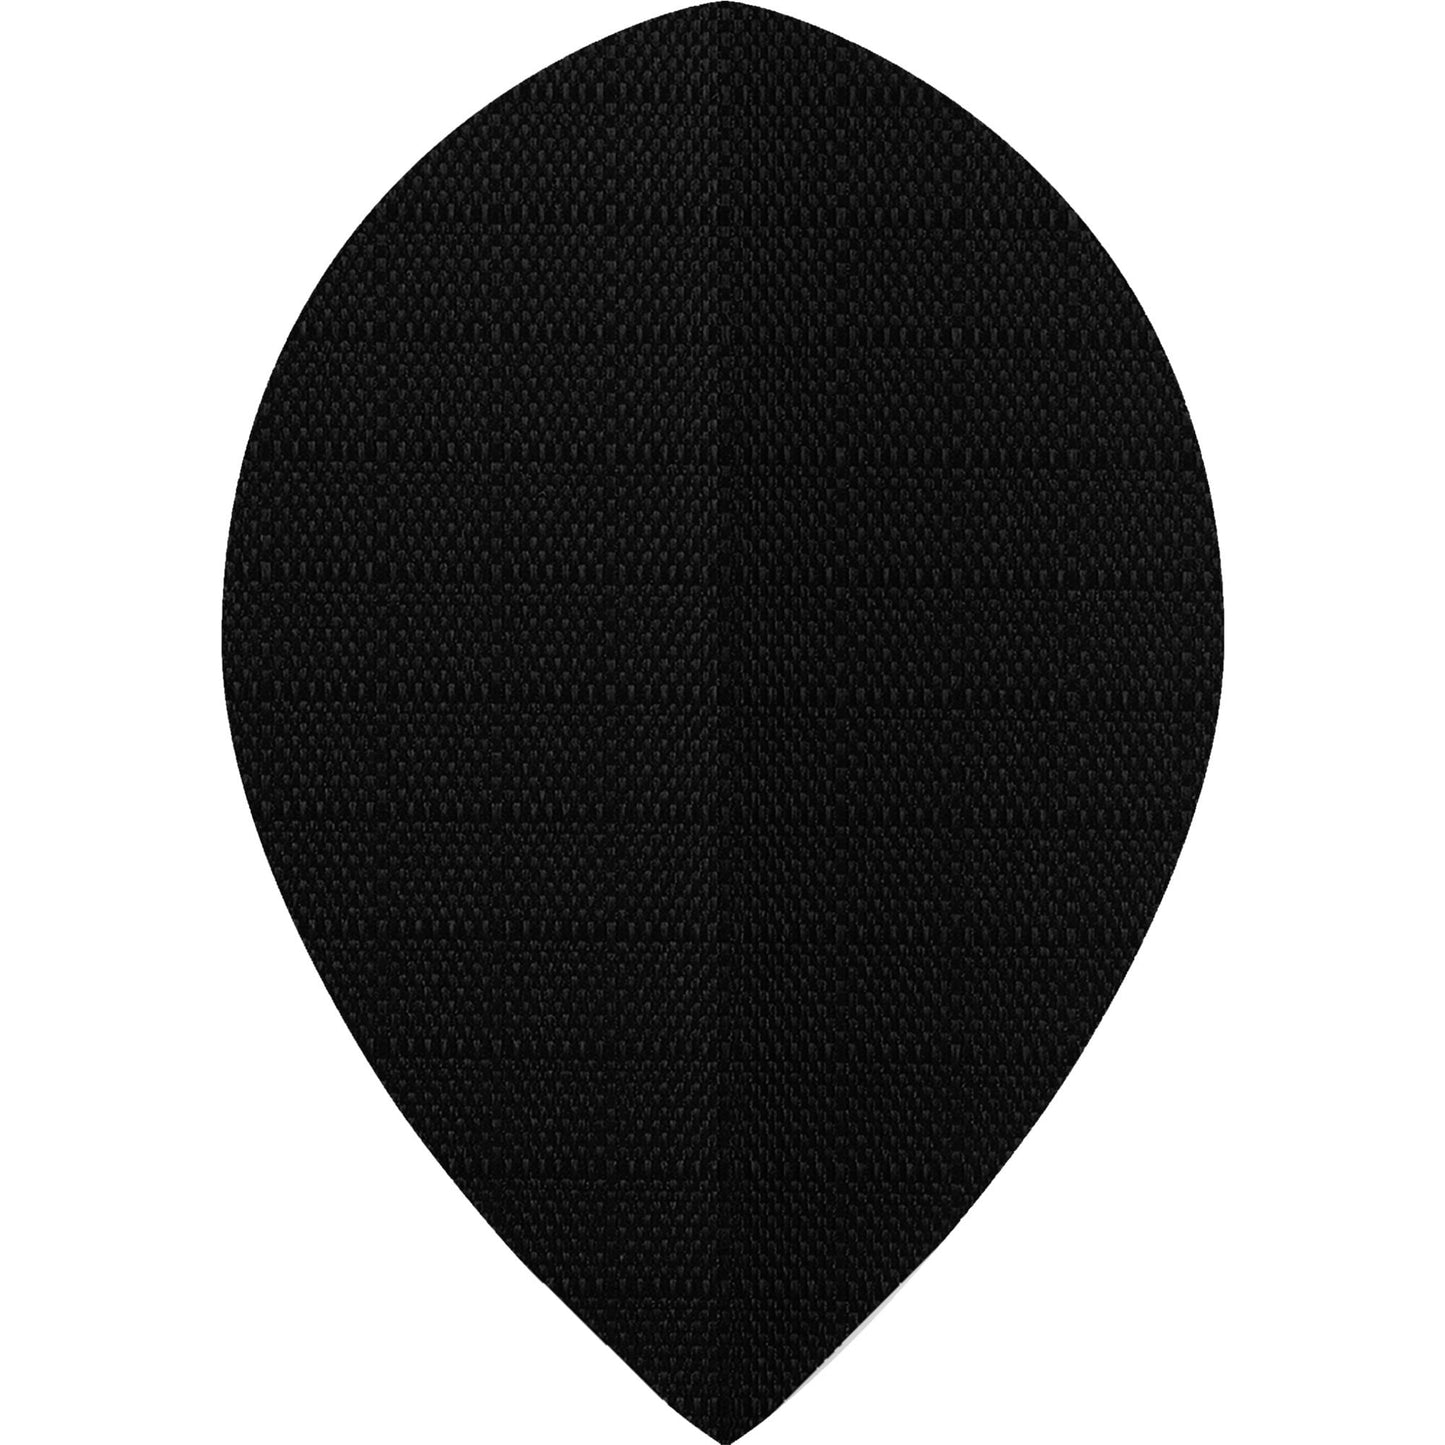 *Designa Dart Flights - Fabric Rip Stop Nylon - Longlife - Pear Black